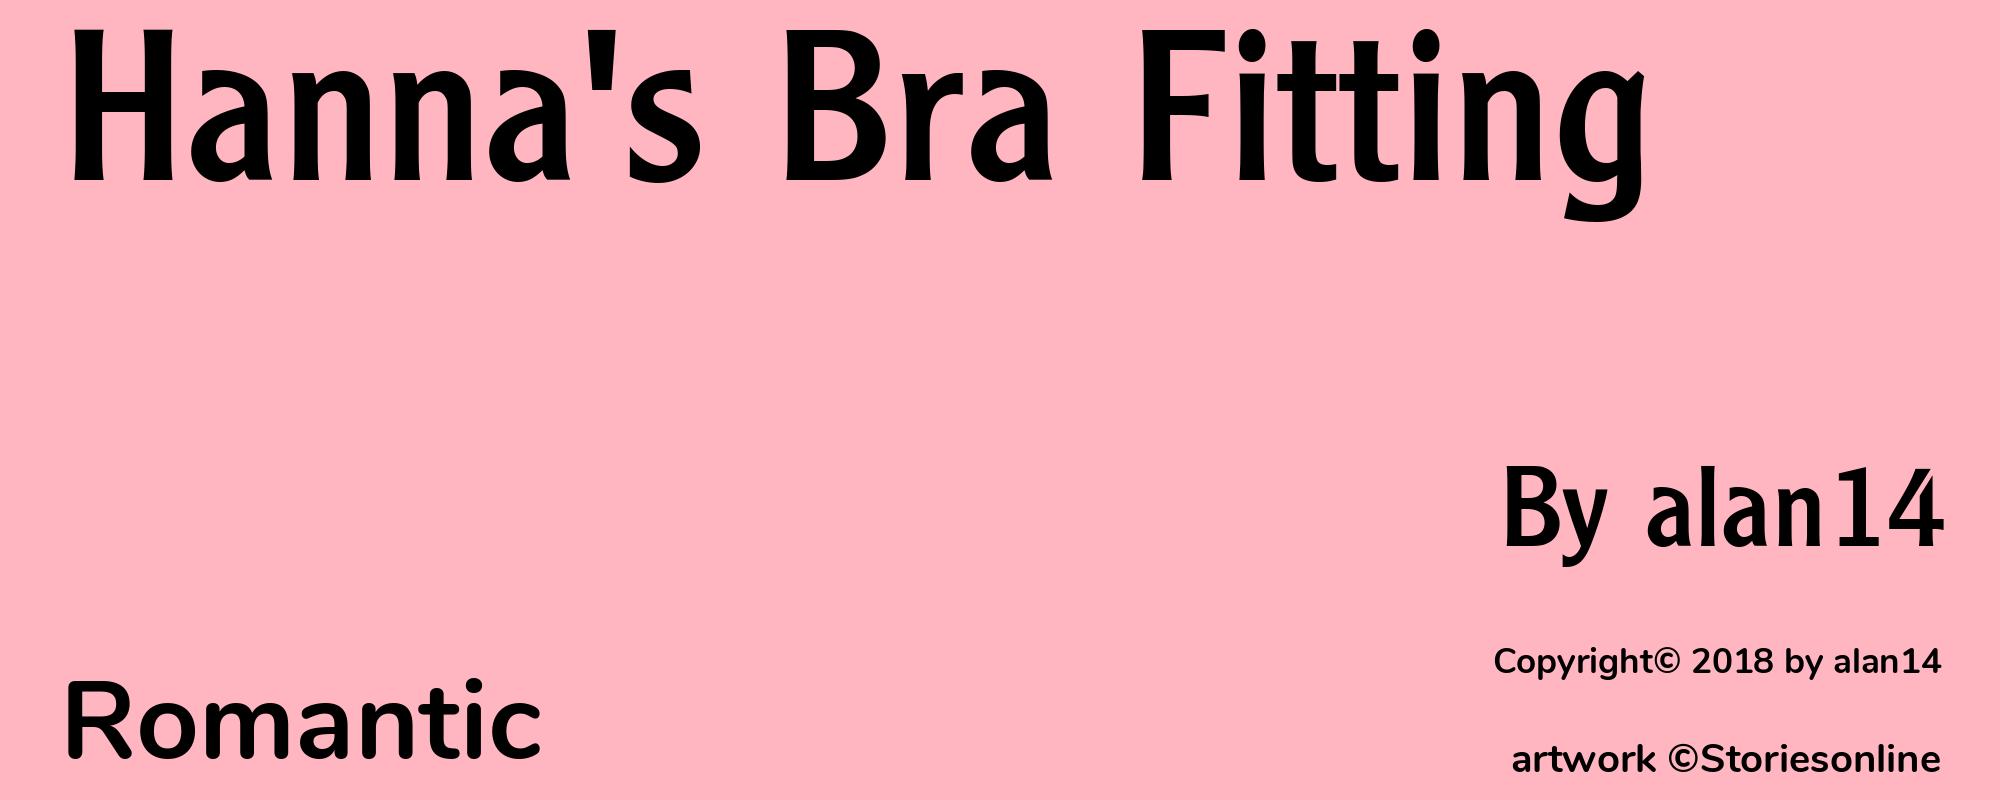 Hanna's Bra Fitting - Cover